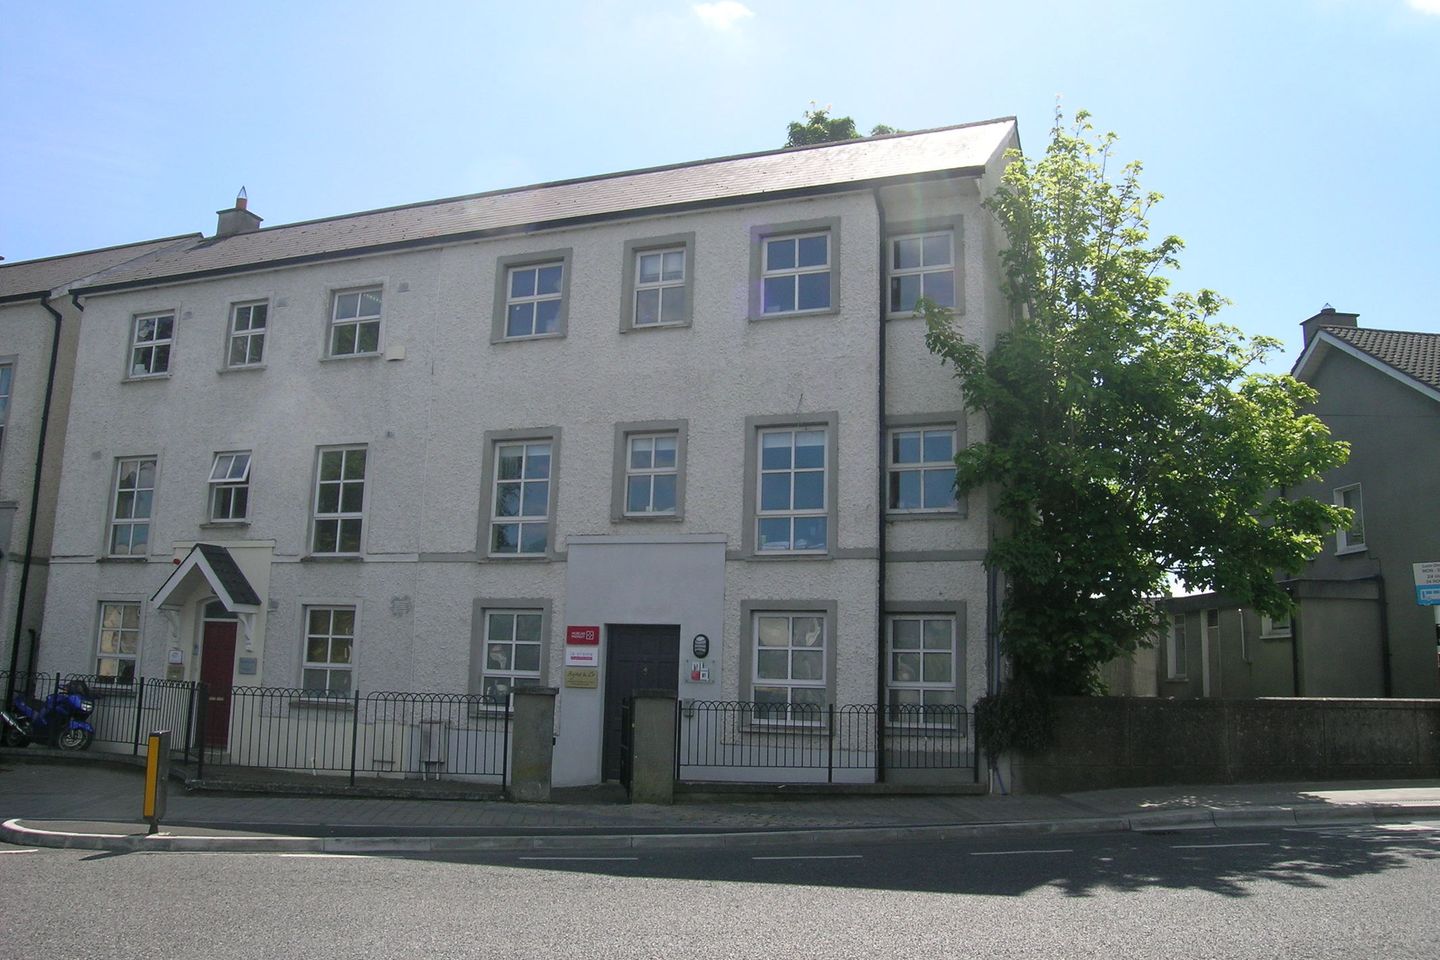 9 Ormonde Court, Kilkenny, Co. Kilkenny